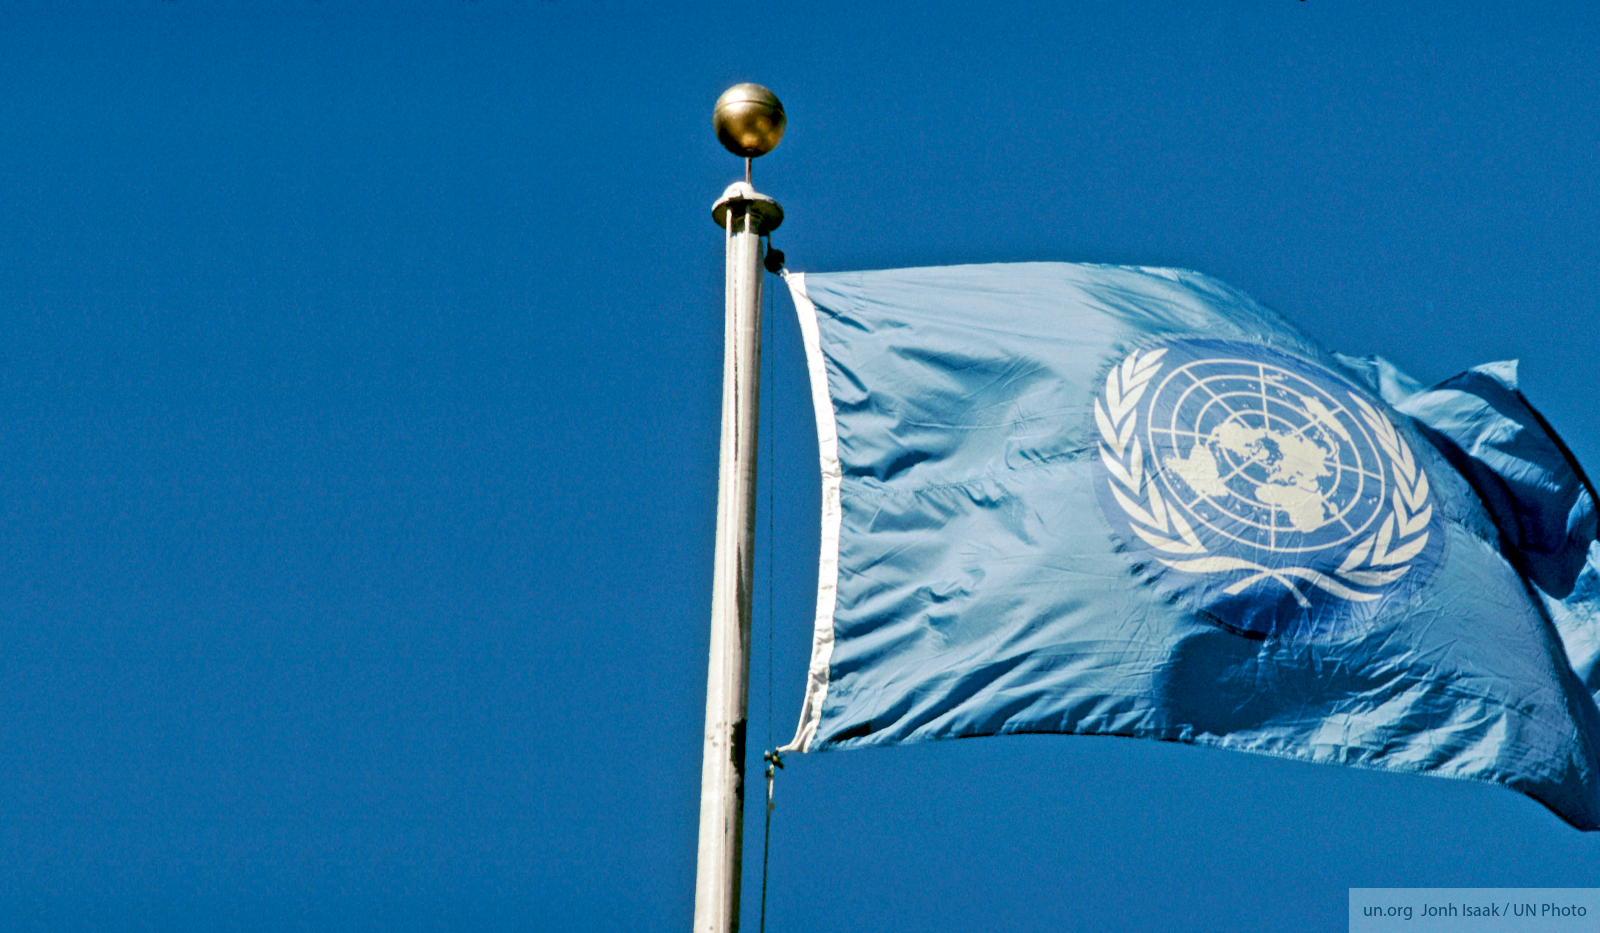 Укрепление оон. Флаг ООН. Флаг организации Объединенных наций. Бюджет ООН. Эгида ООН.